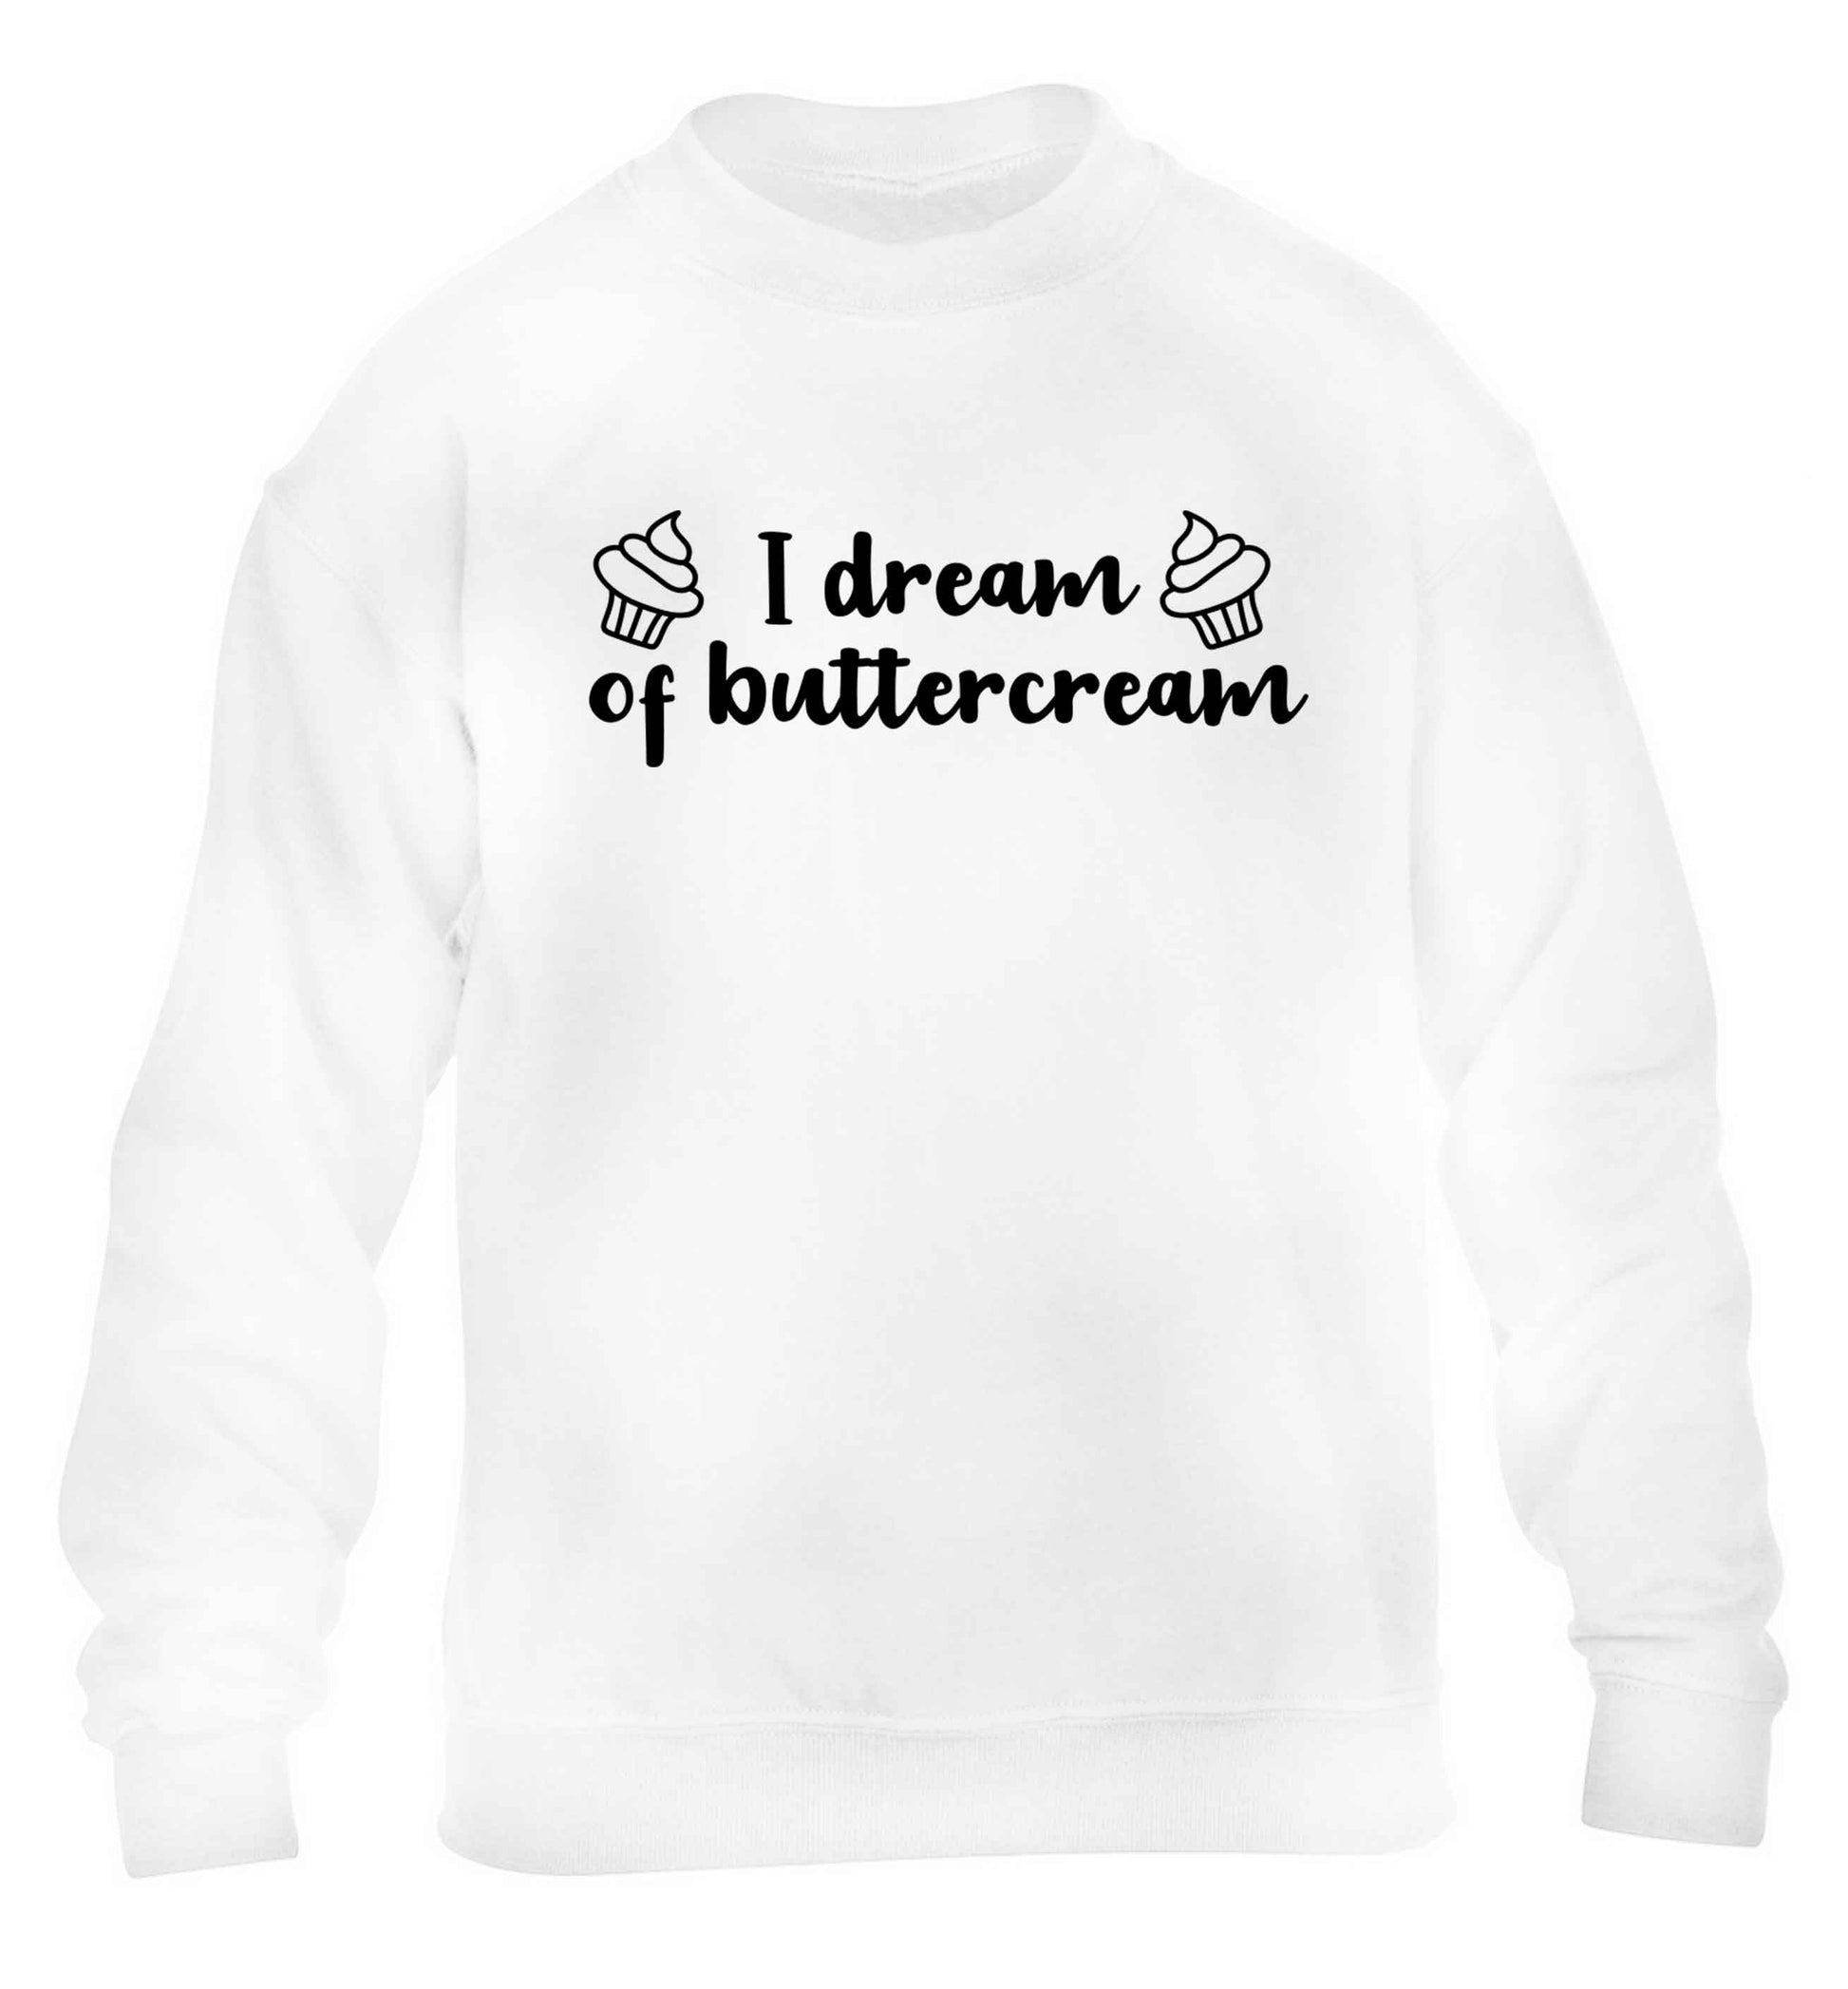 I dream of buttercream children's white sweater 12-13 Years